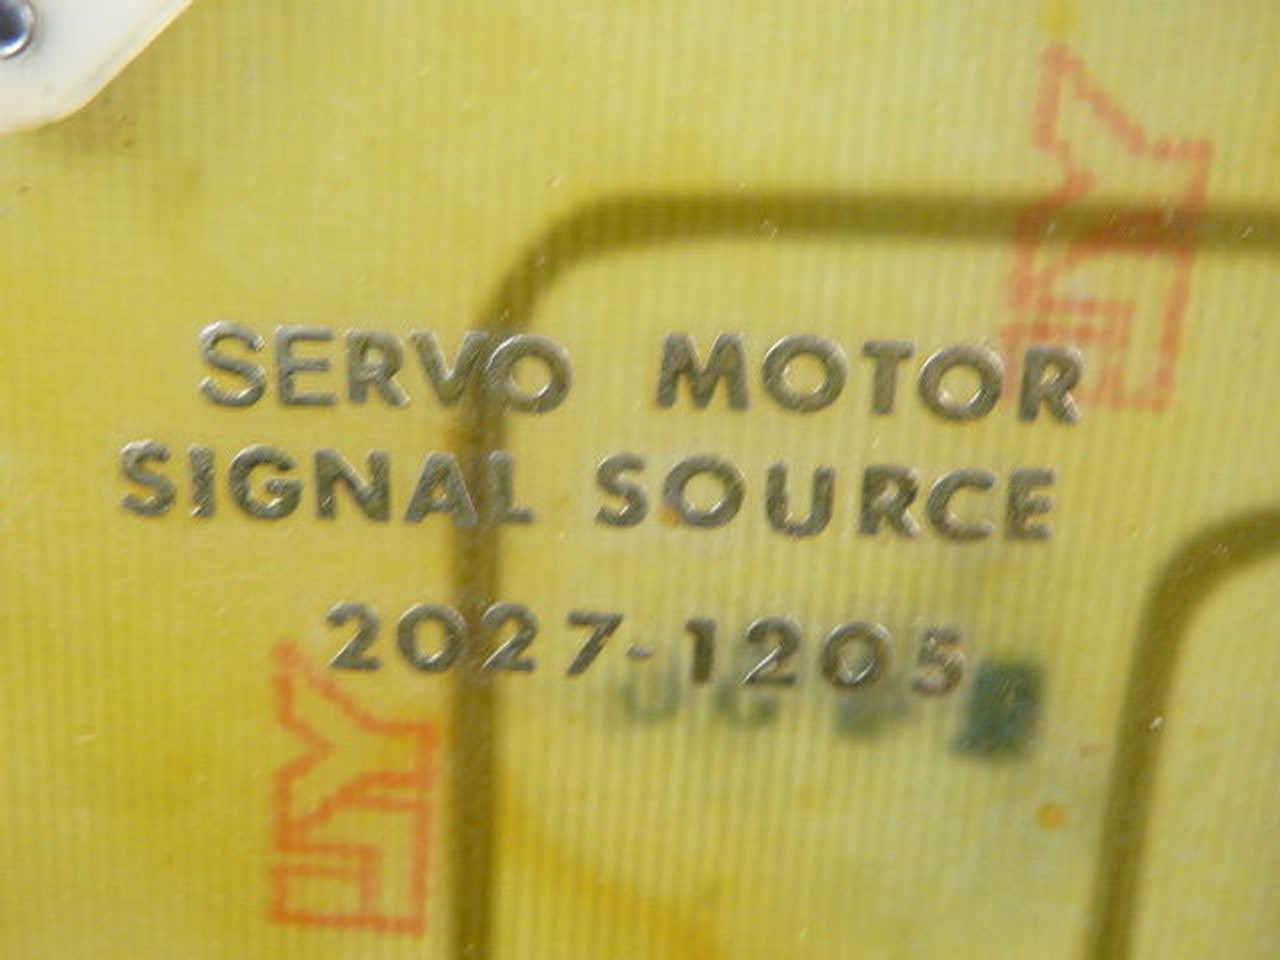 Formax Cashin 2027-1205 Servo Motor Signal Source Board USED